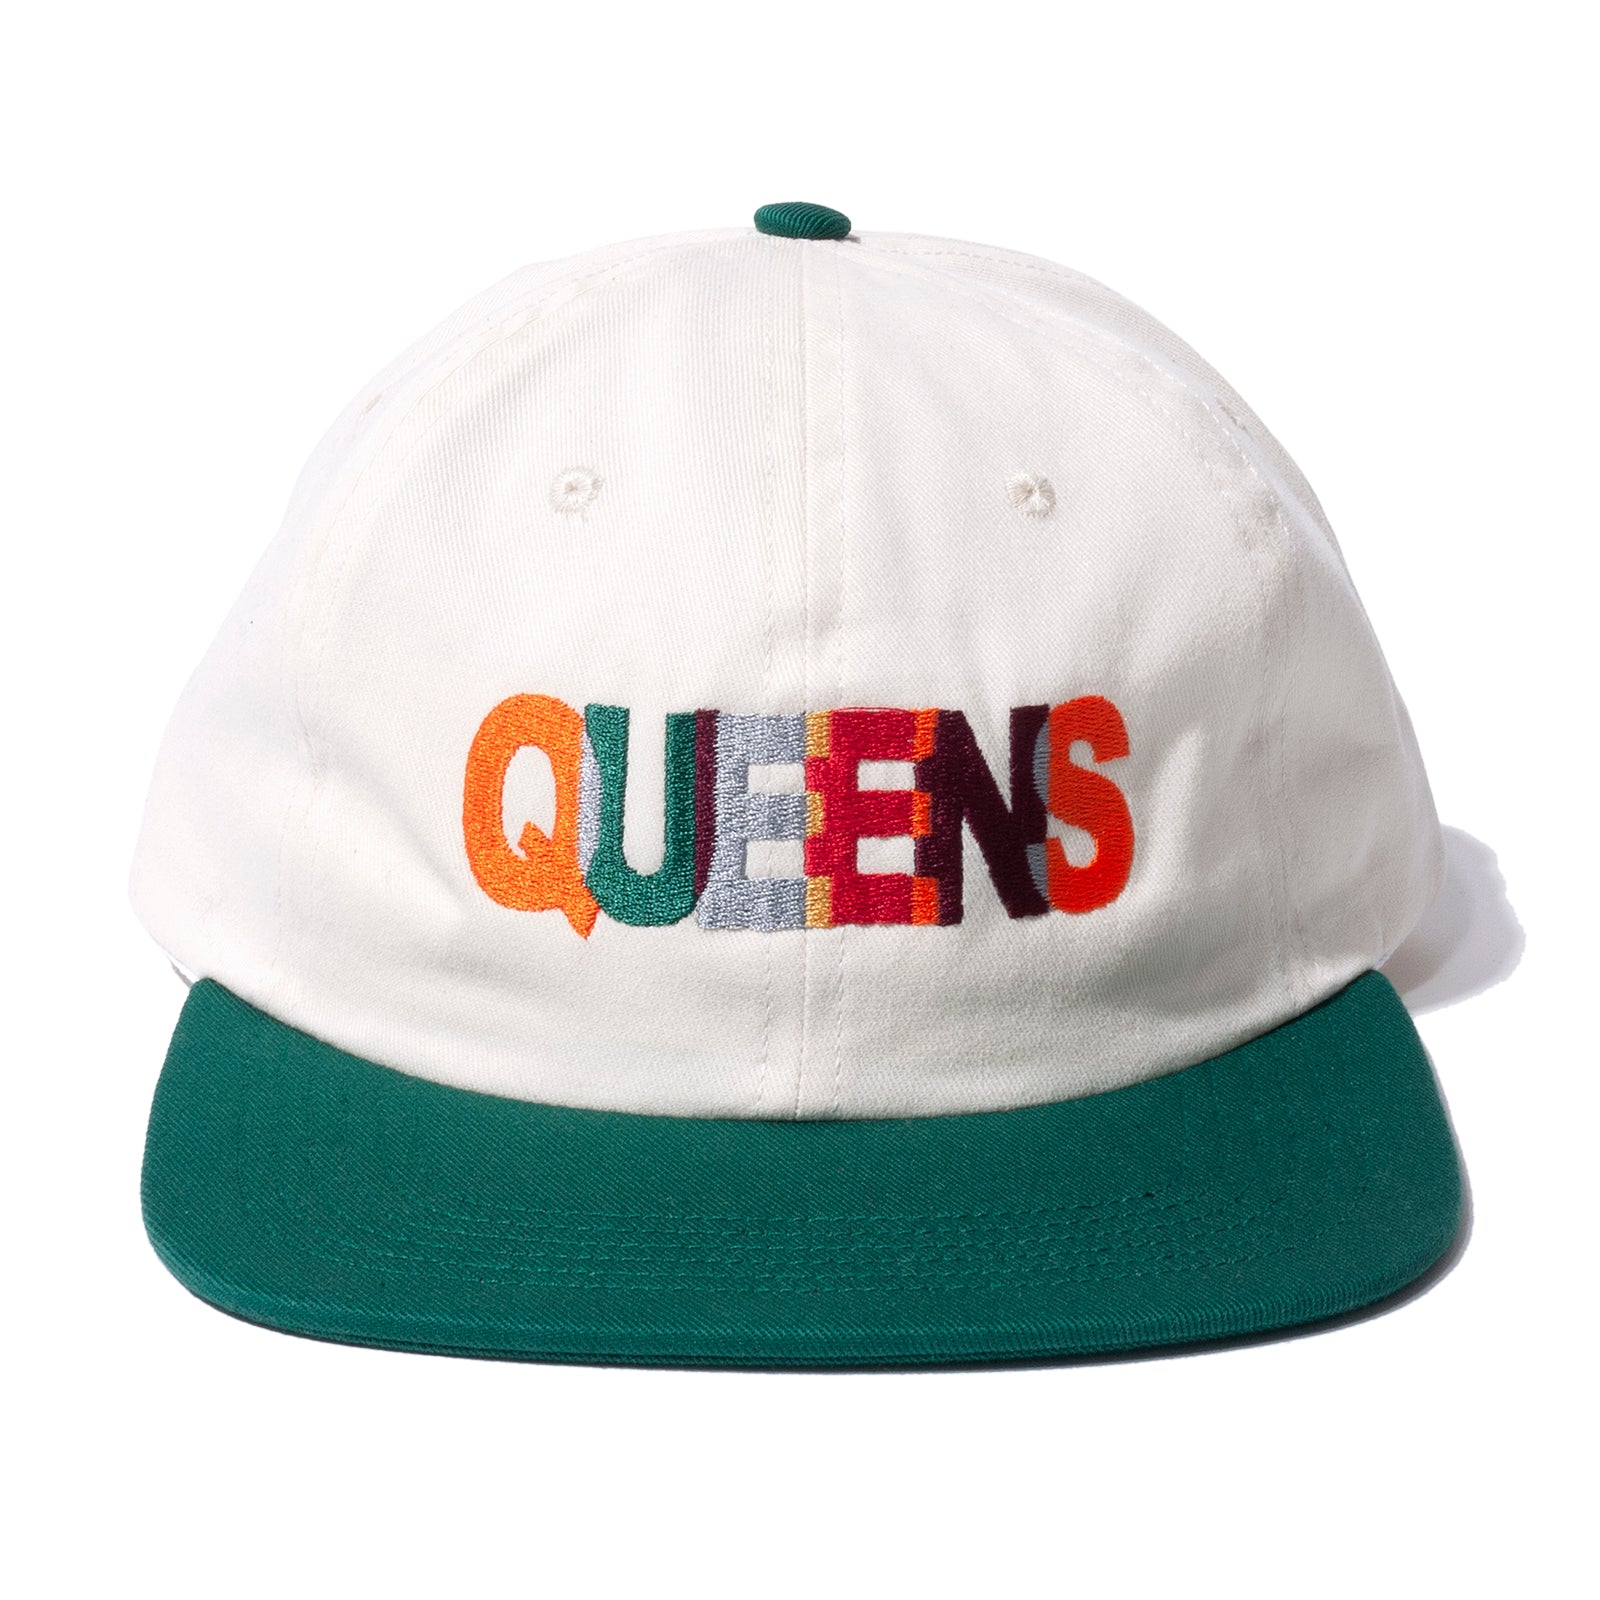 超激安即納新品 SELECTS NYC UNISPHERE HAT 6 PANEL 帽子